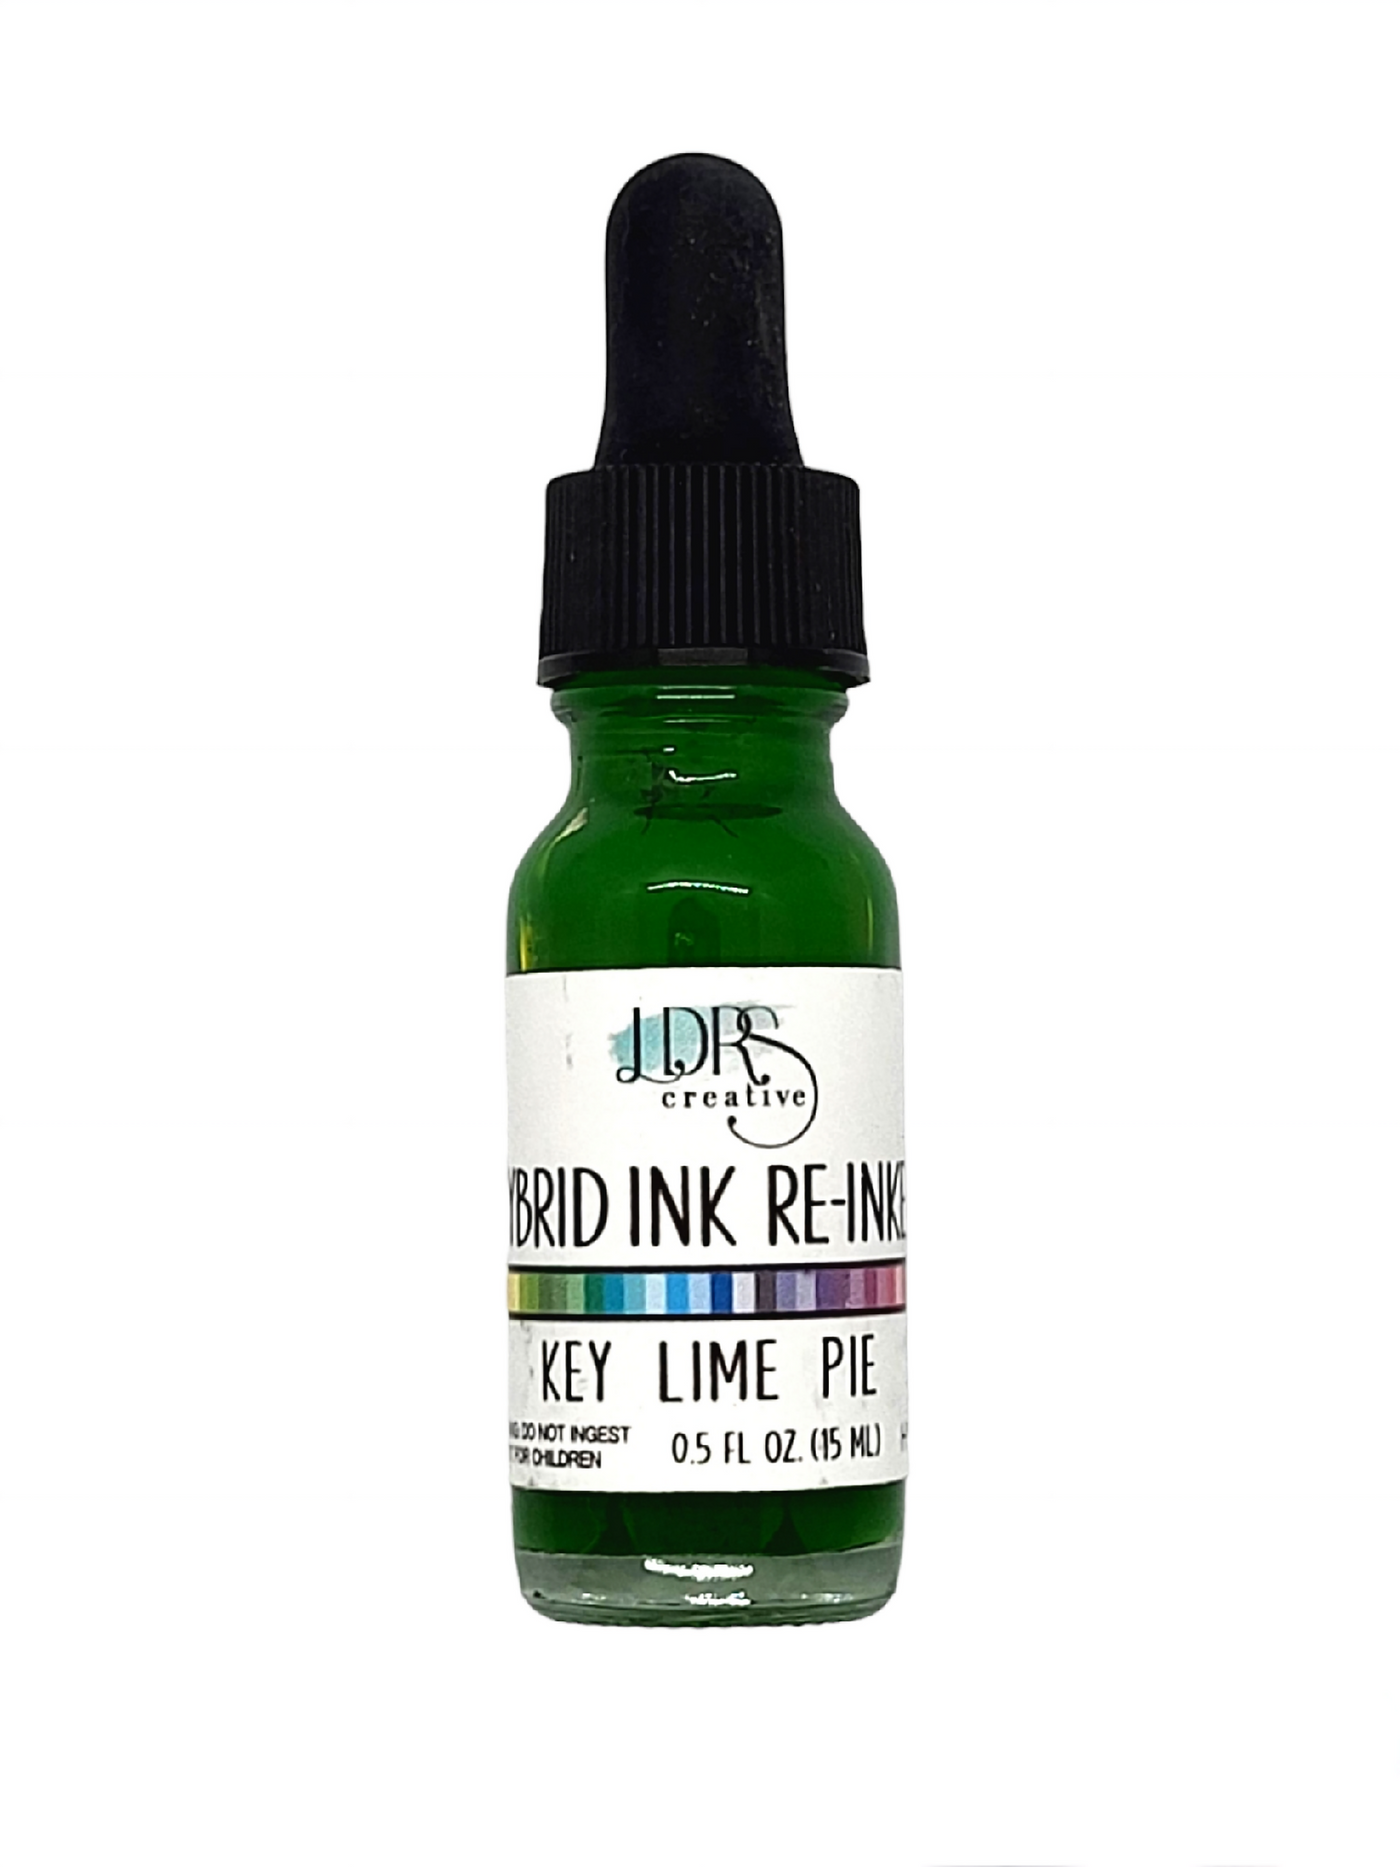 Key Lime Pie Hybrid Ink Re-Inker